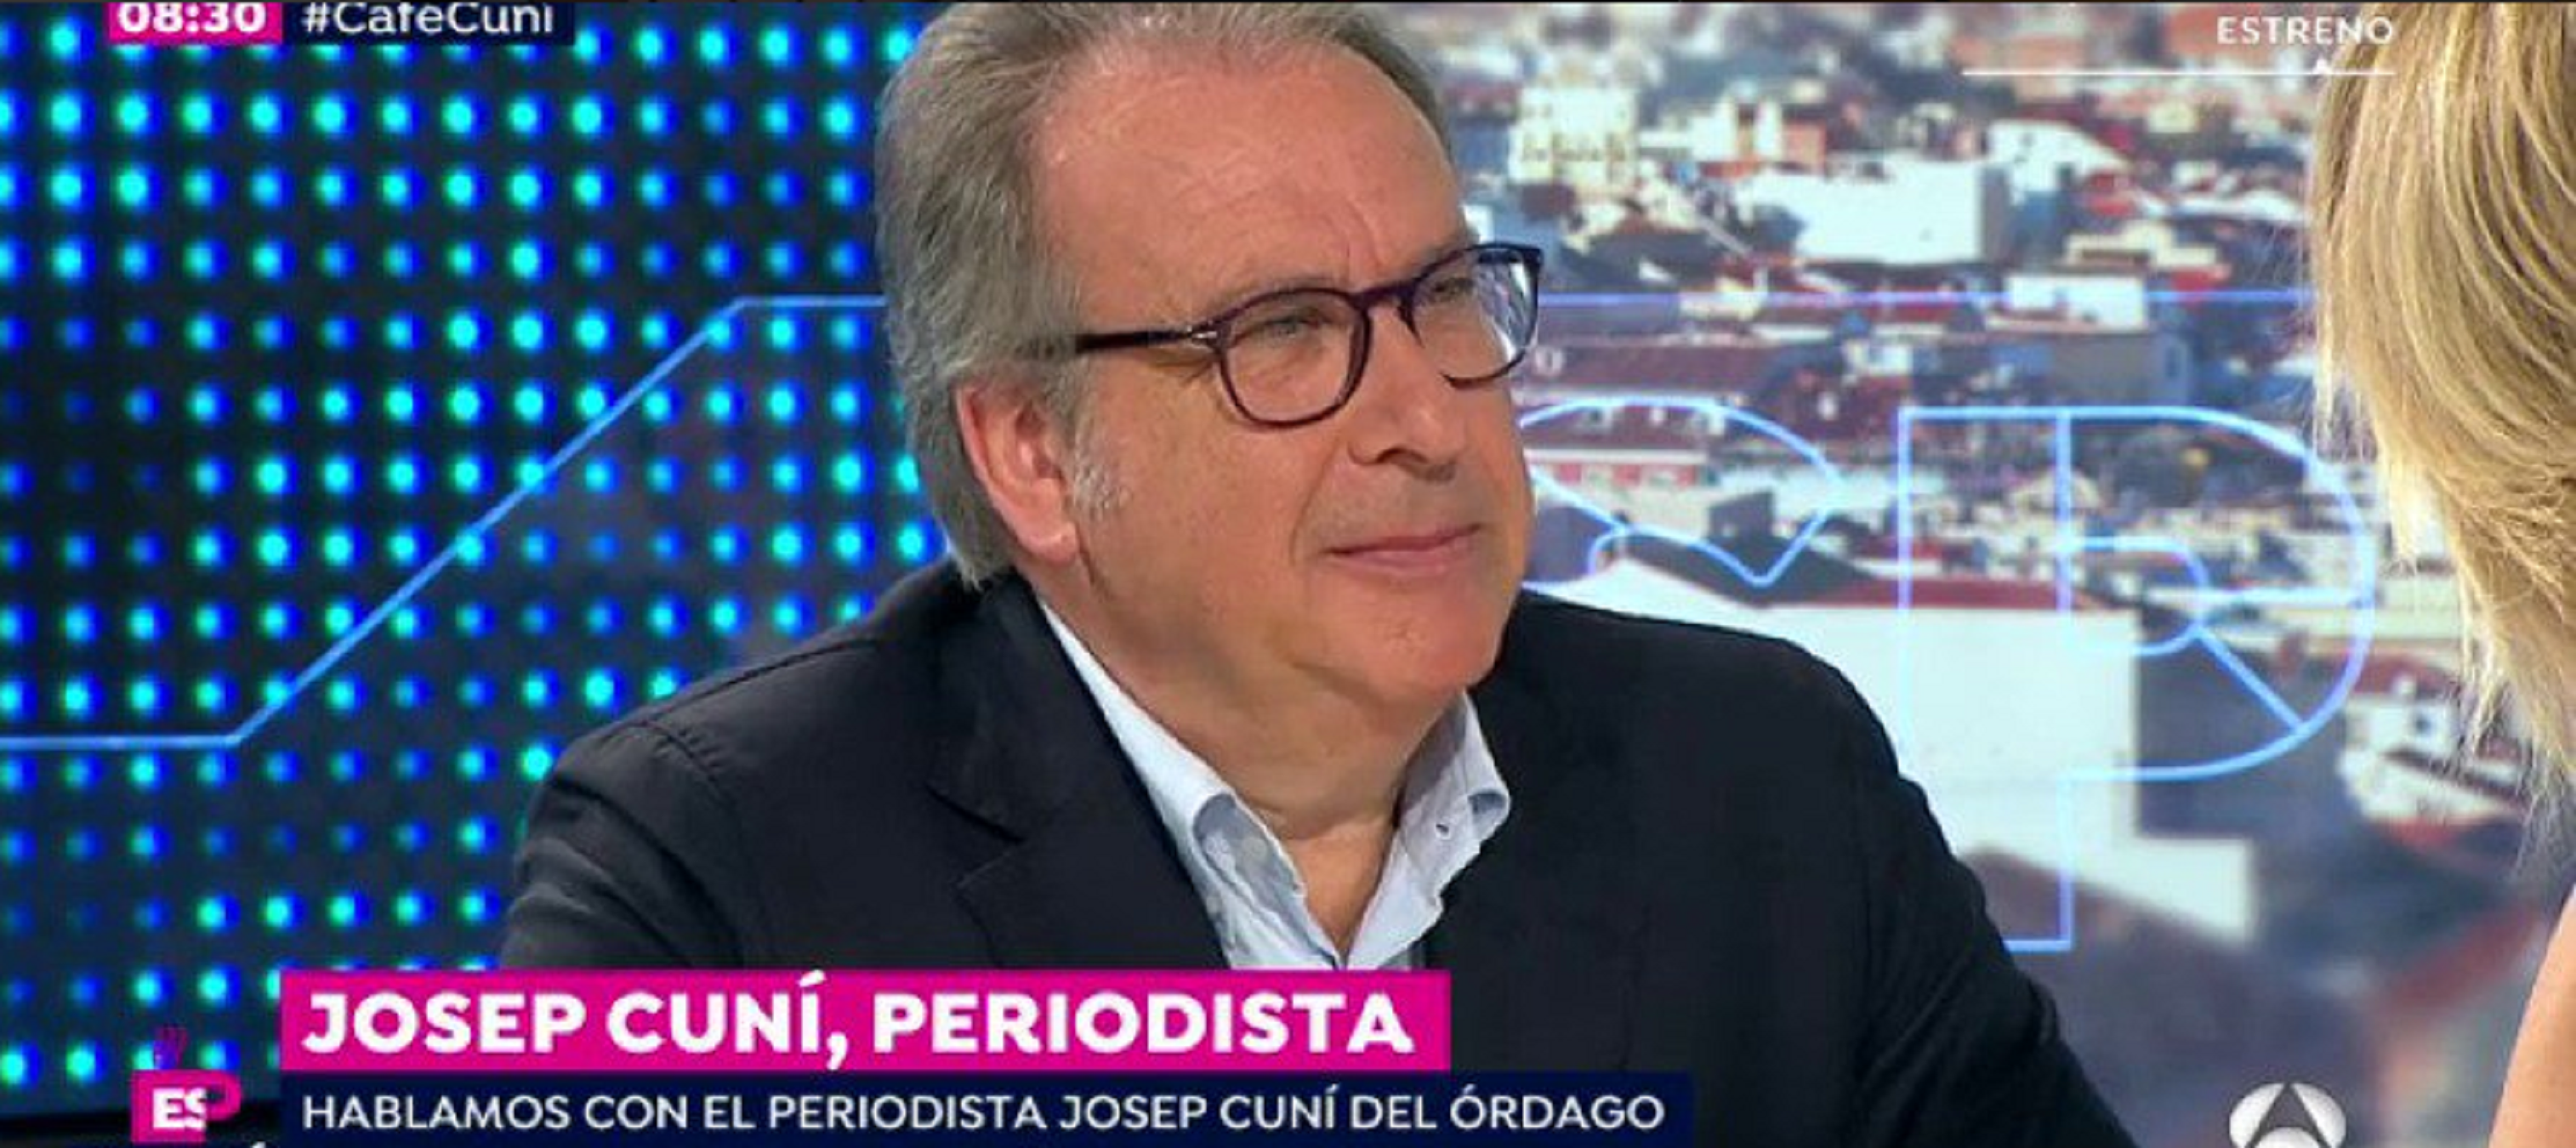 Josep Cuní vuelve a la televisión con Susanna Griso en Antena 3